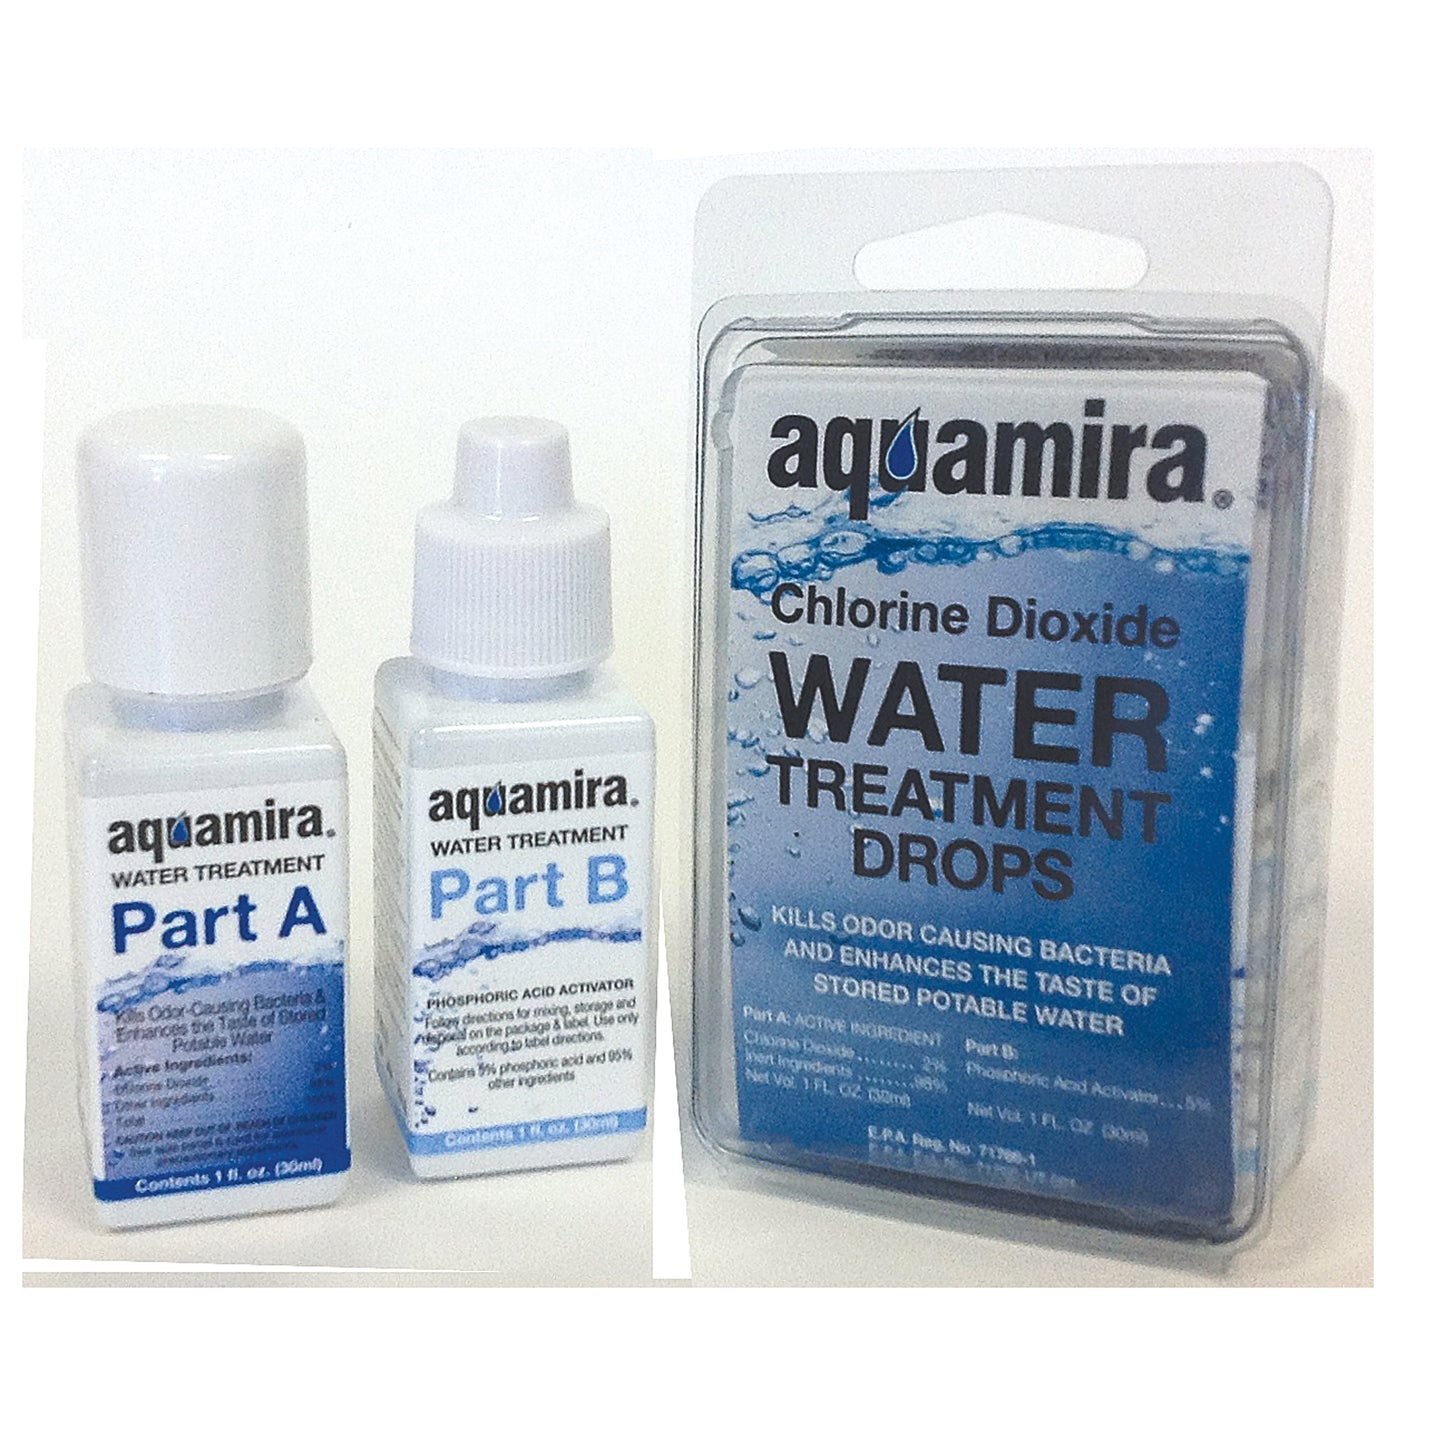 Aquamira Water Treatment Drops 1oz Bottles Treats Up to 30 Gal of Water 67202 - California Shooting Supplies